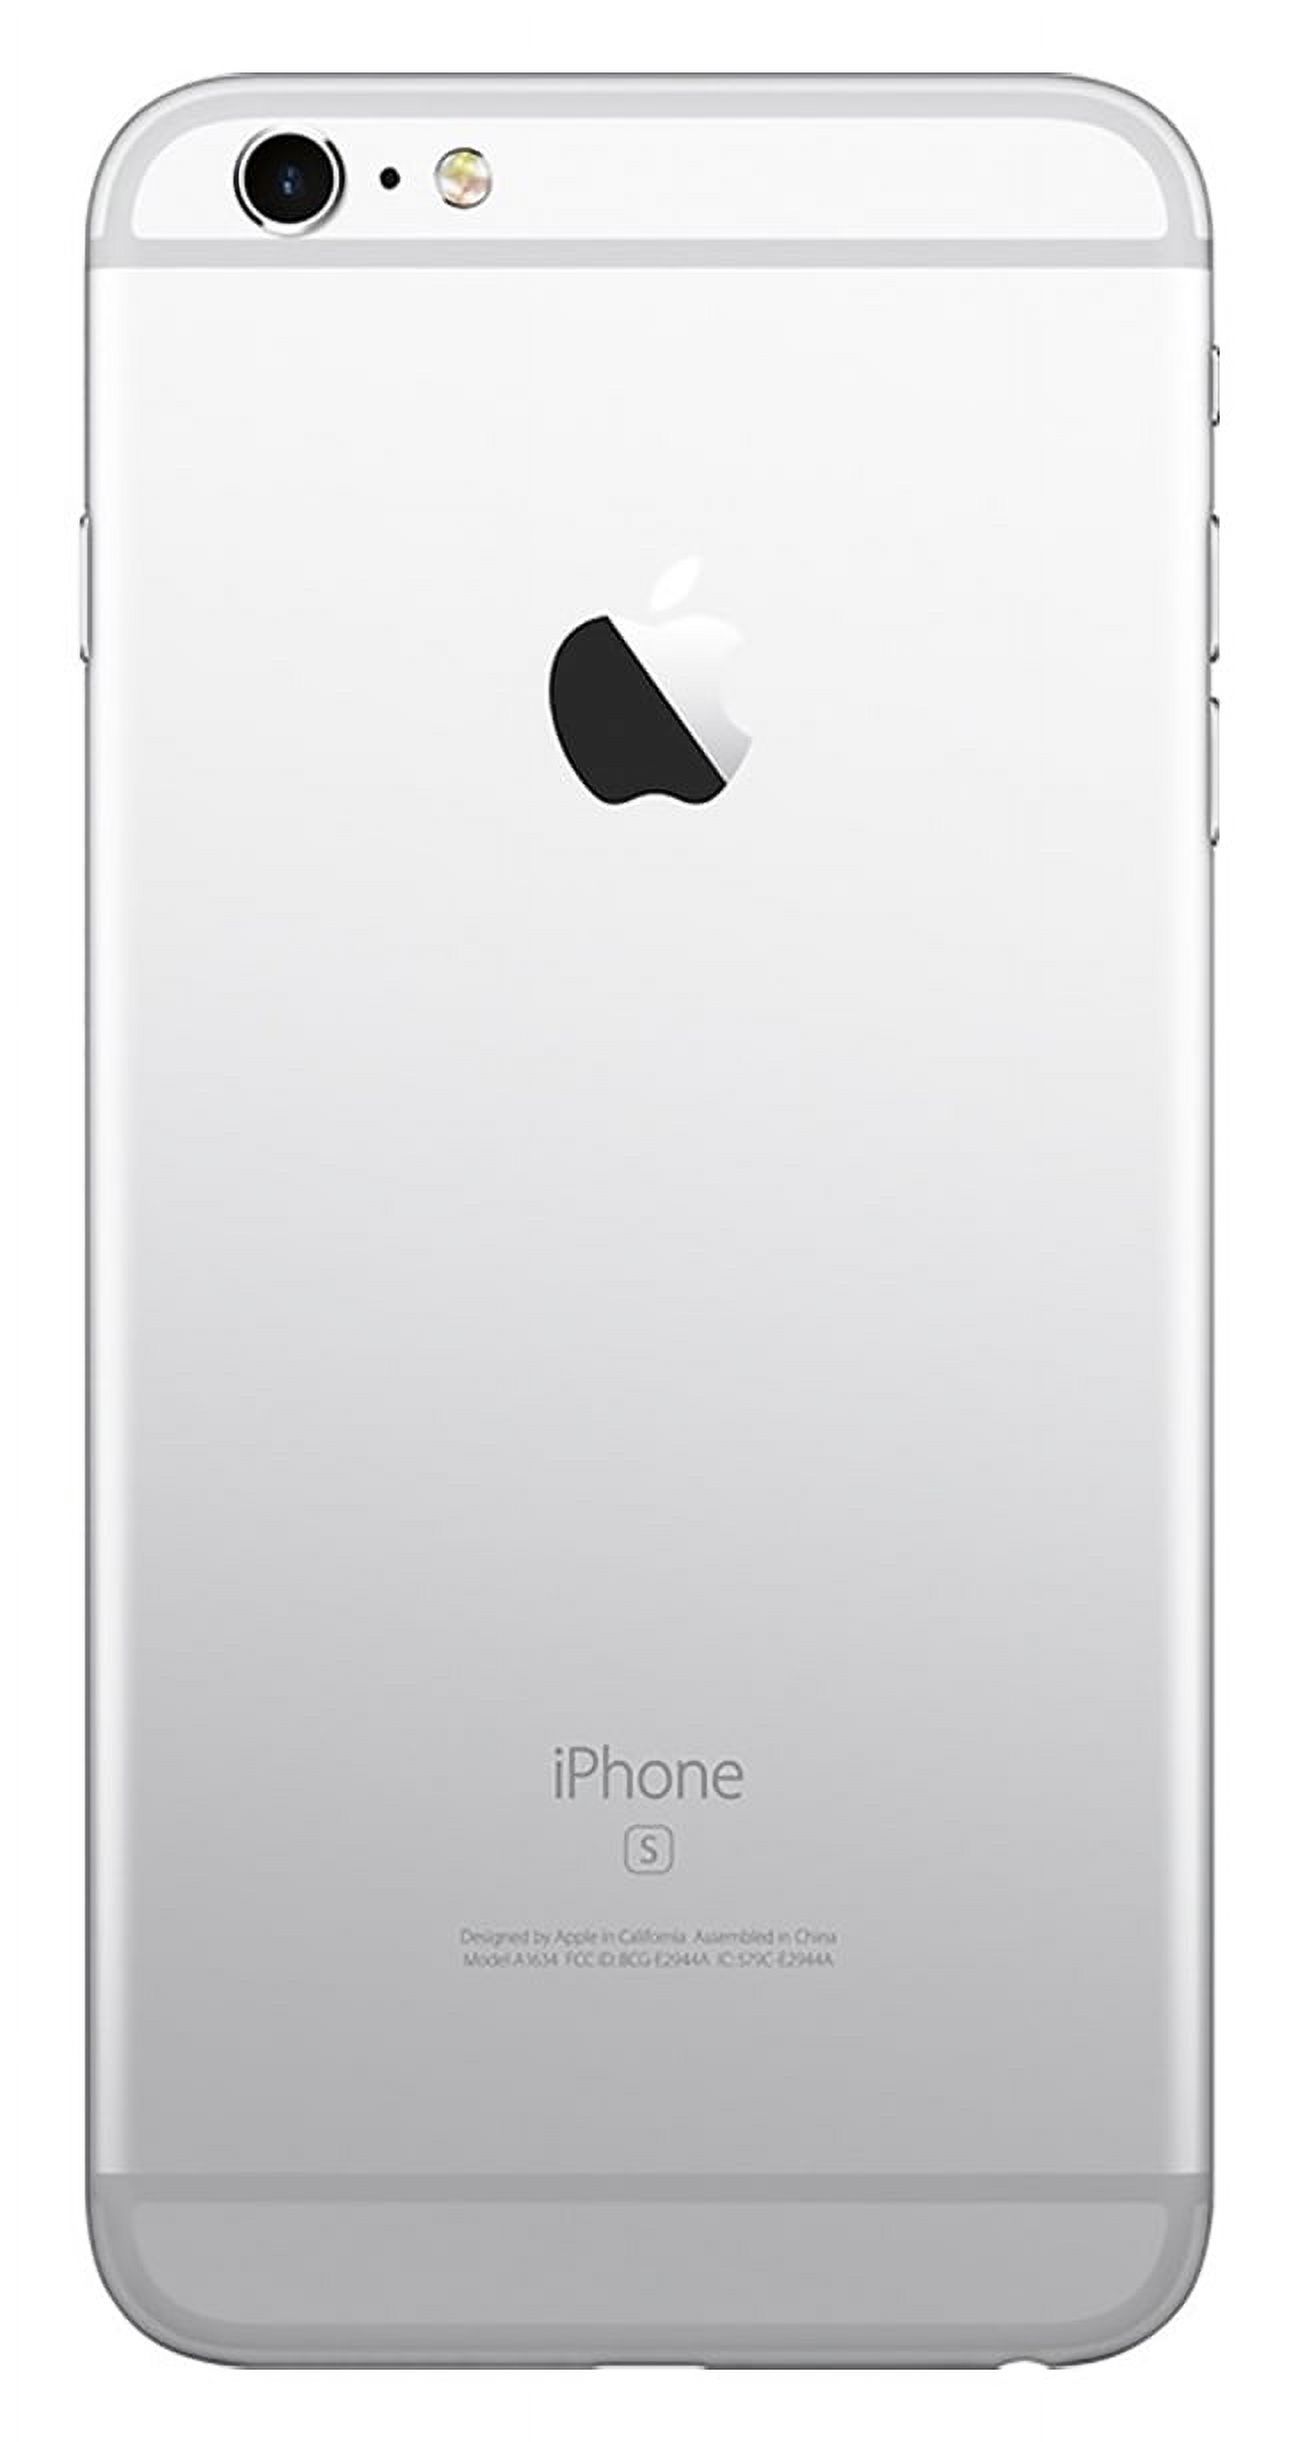 Restored Apple iPhone 6s Plus 16GB, Silver Unlocked GSM (Refurbished) - image 2 of 3